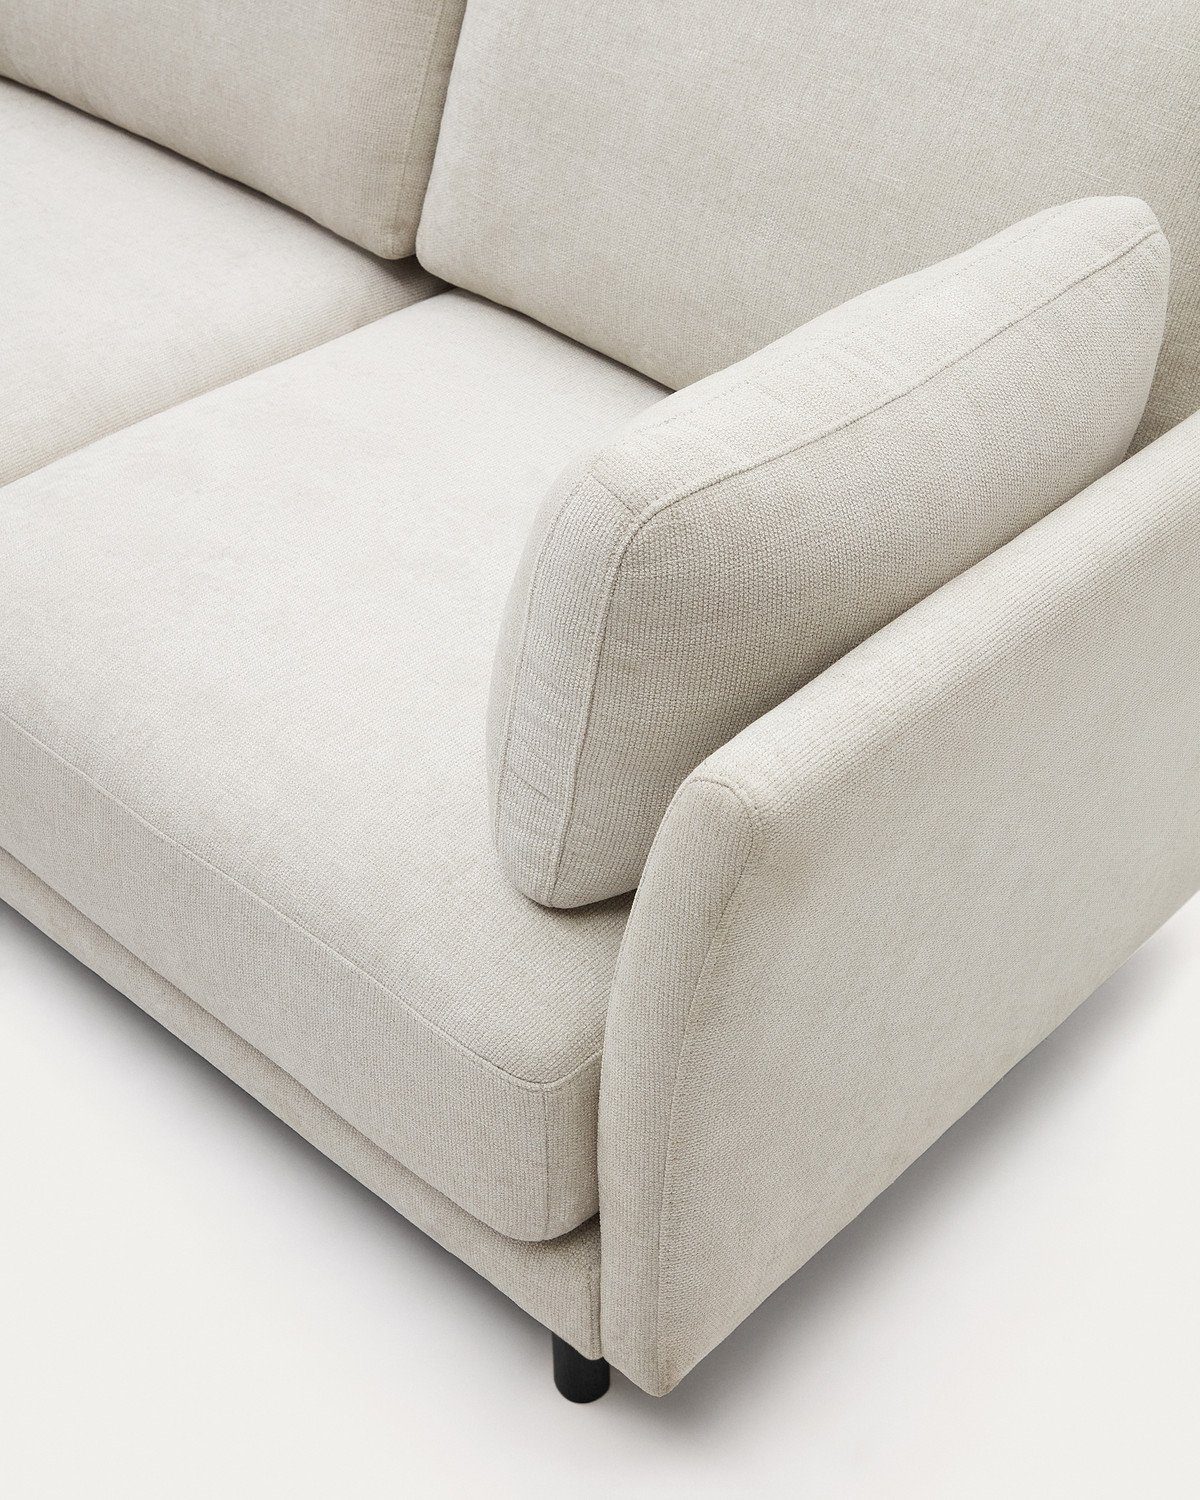 Beige Sofa Sofa cm 2-Sitzer Neu Stuhl Gilma Couch Chenille x Natur24 83 170 x 83